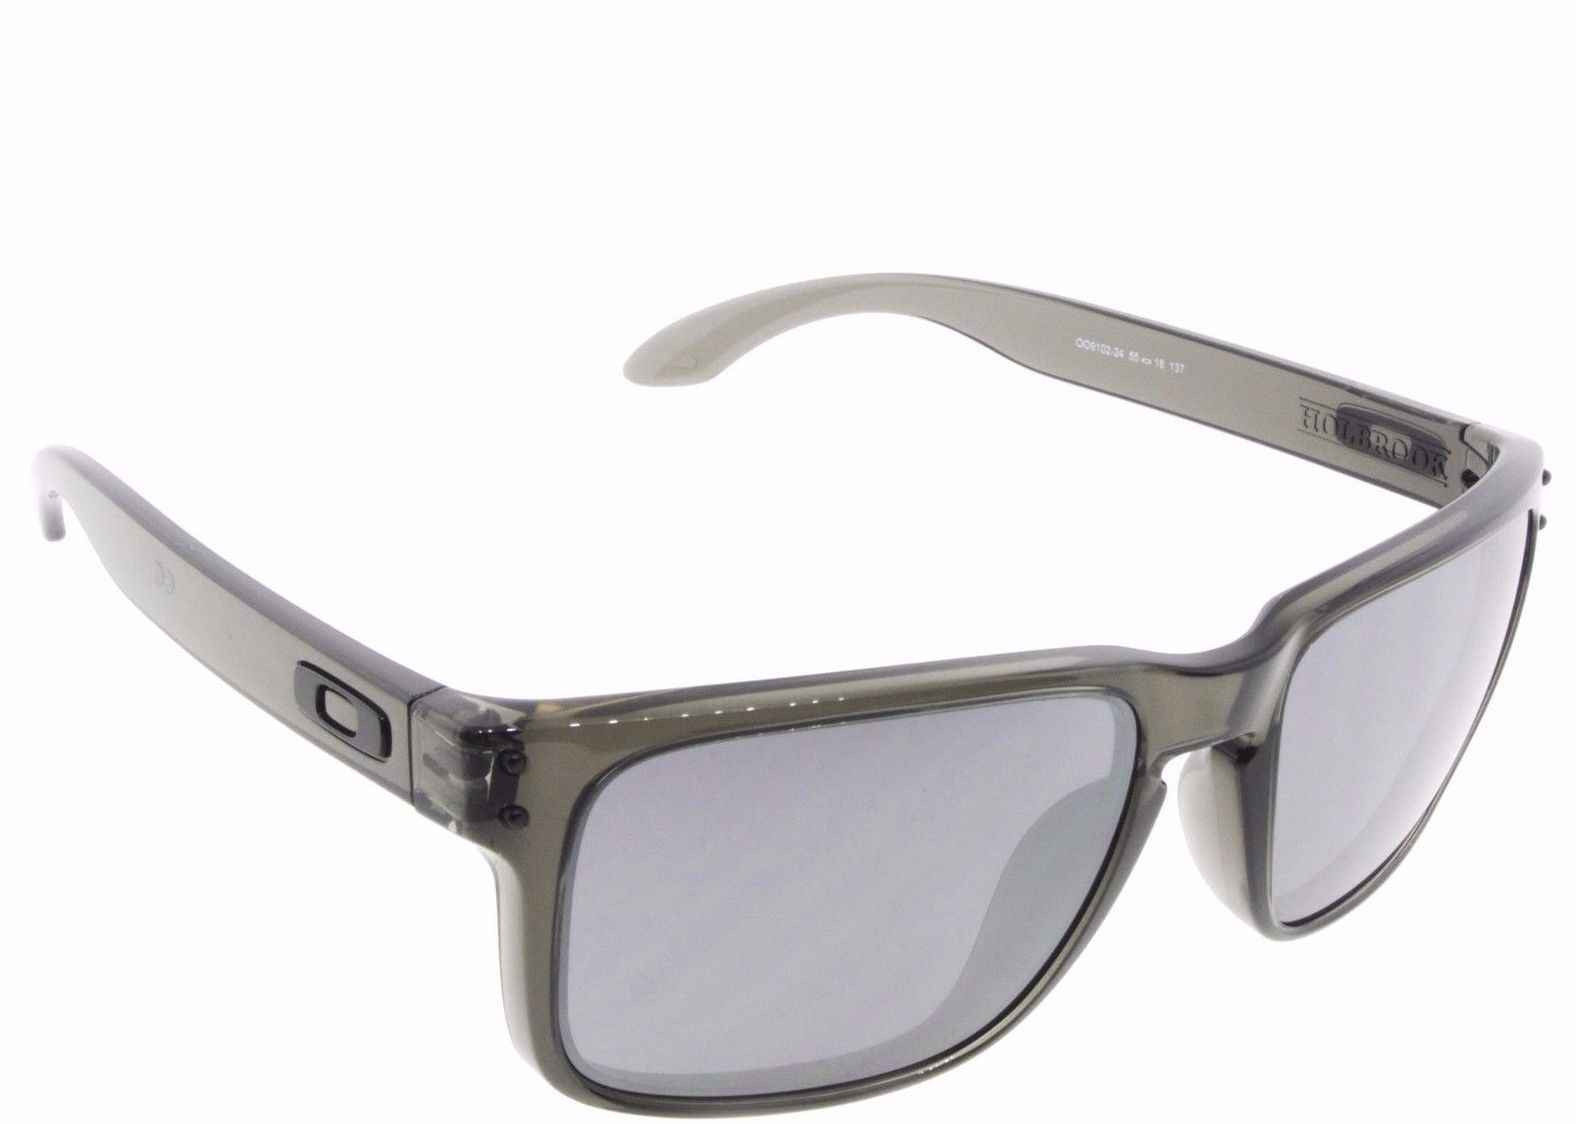 oakley holbrook sunglasses grey smoke black iridium